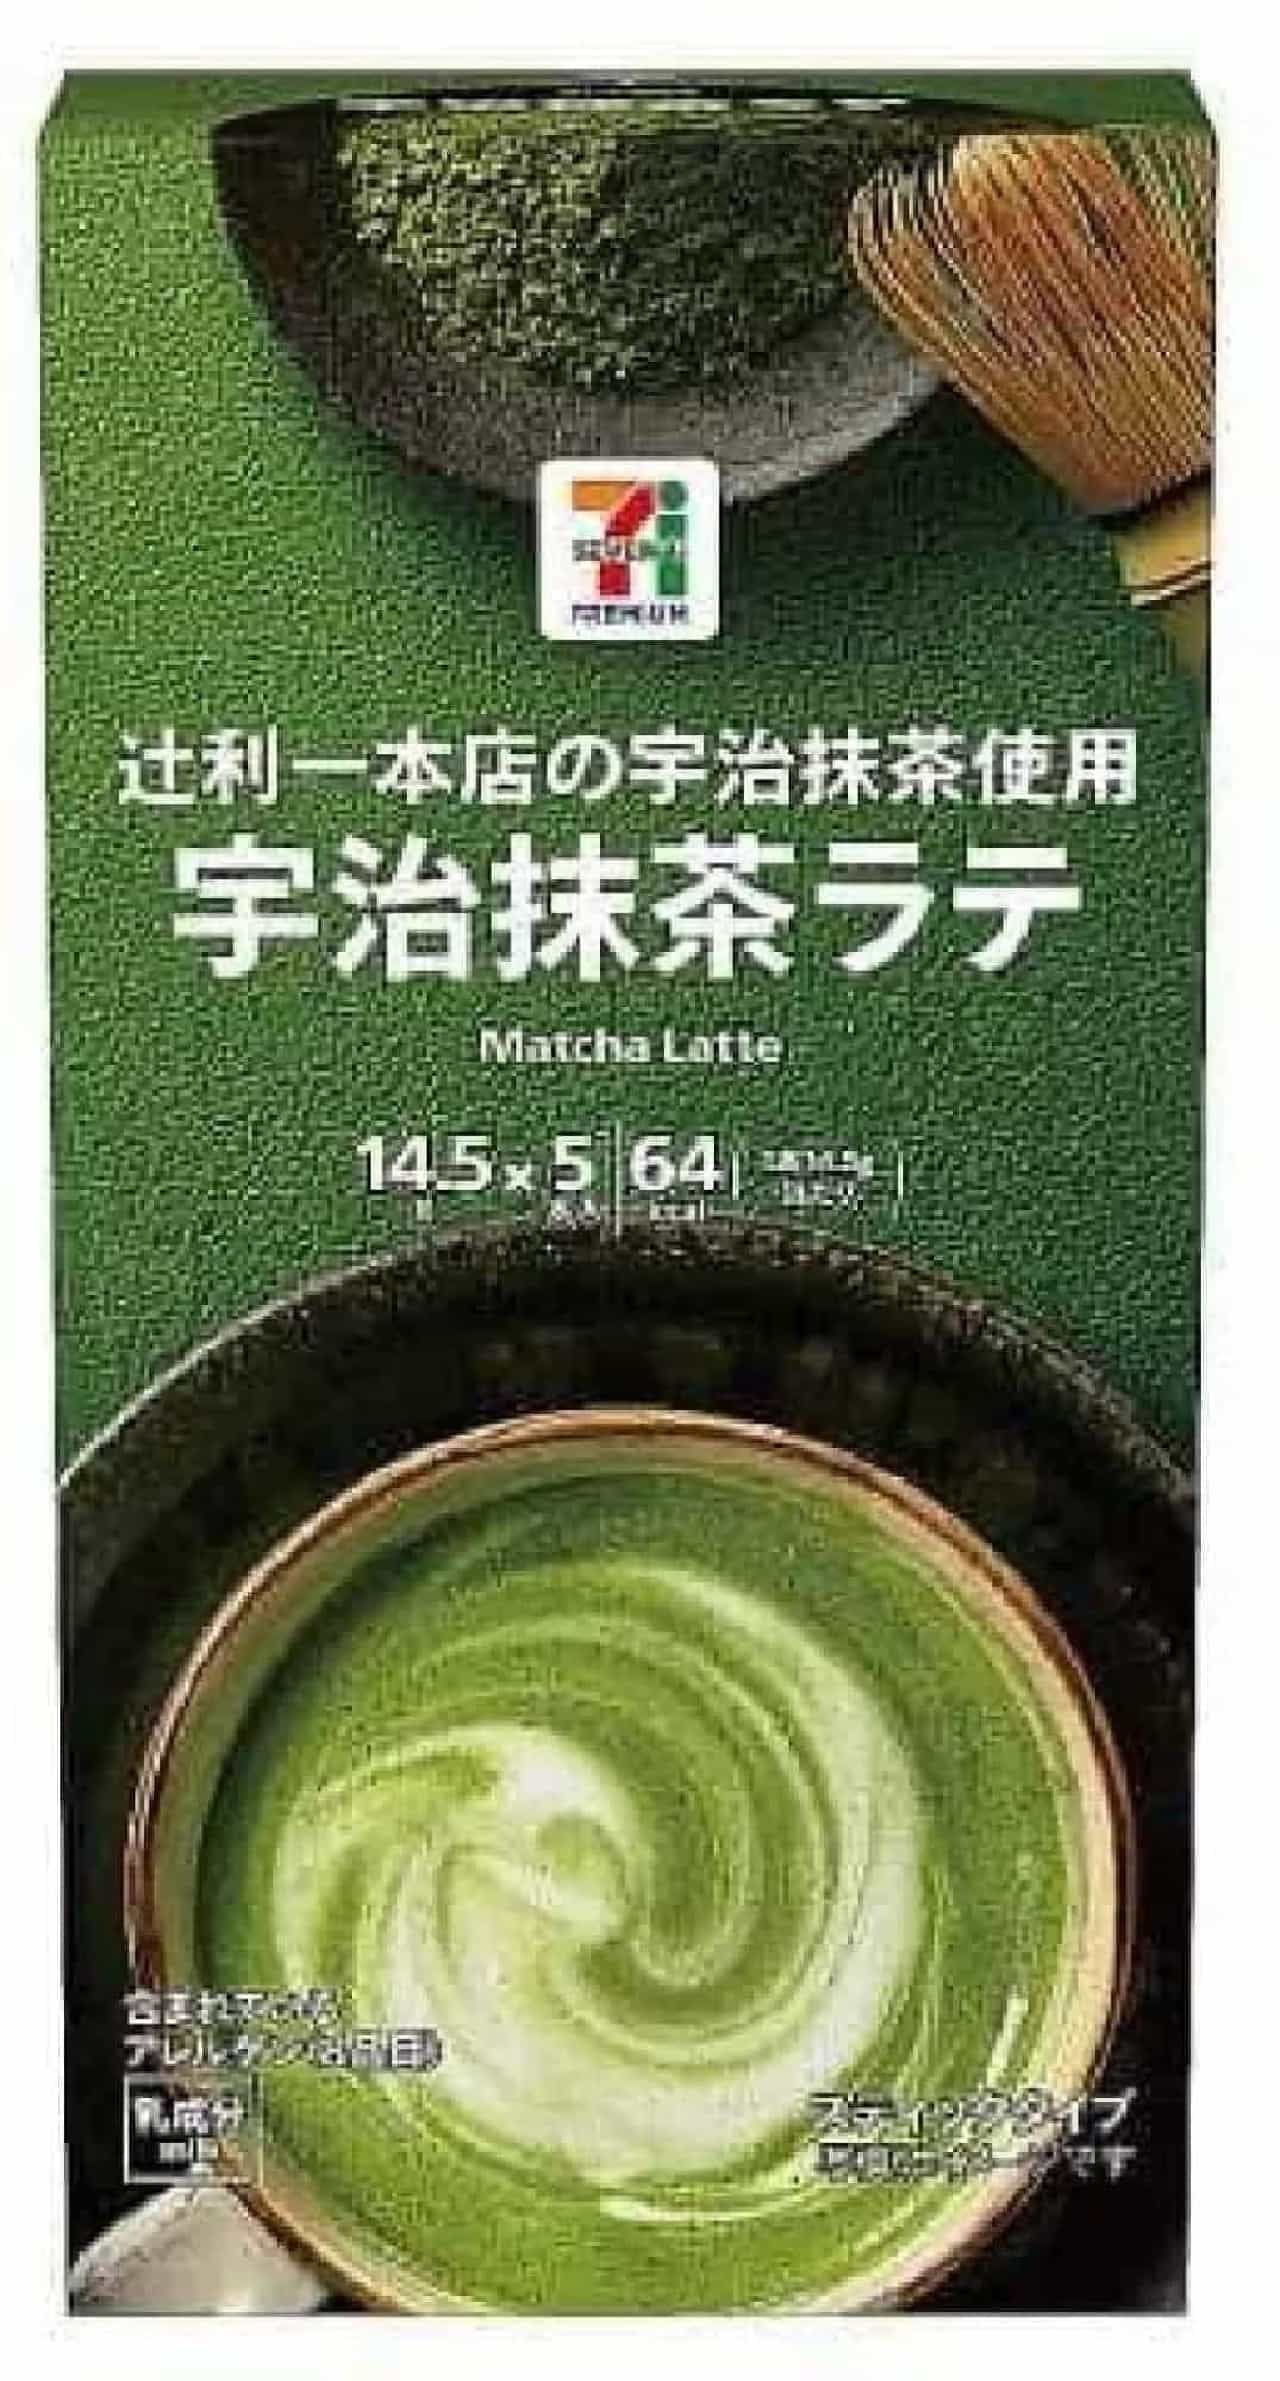 7-ELEVEN "Uji green tea latte